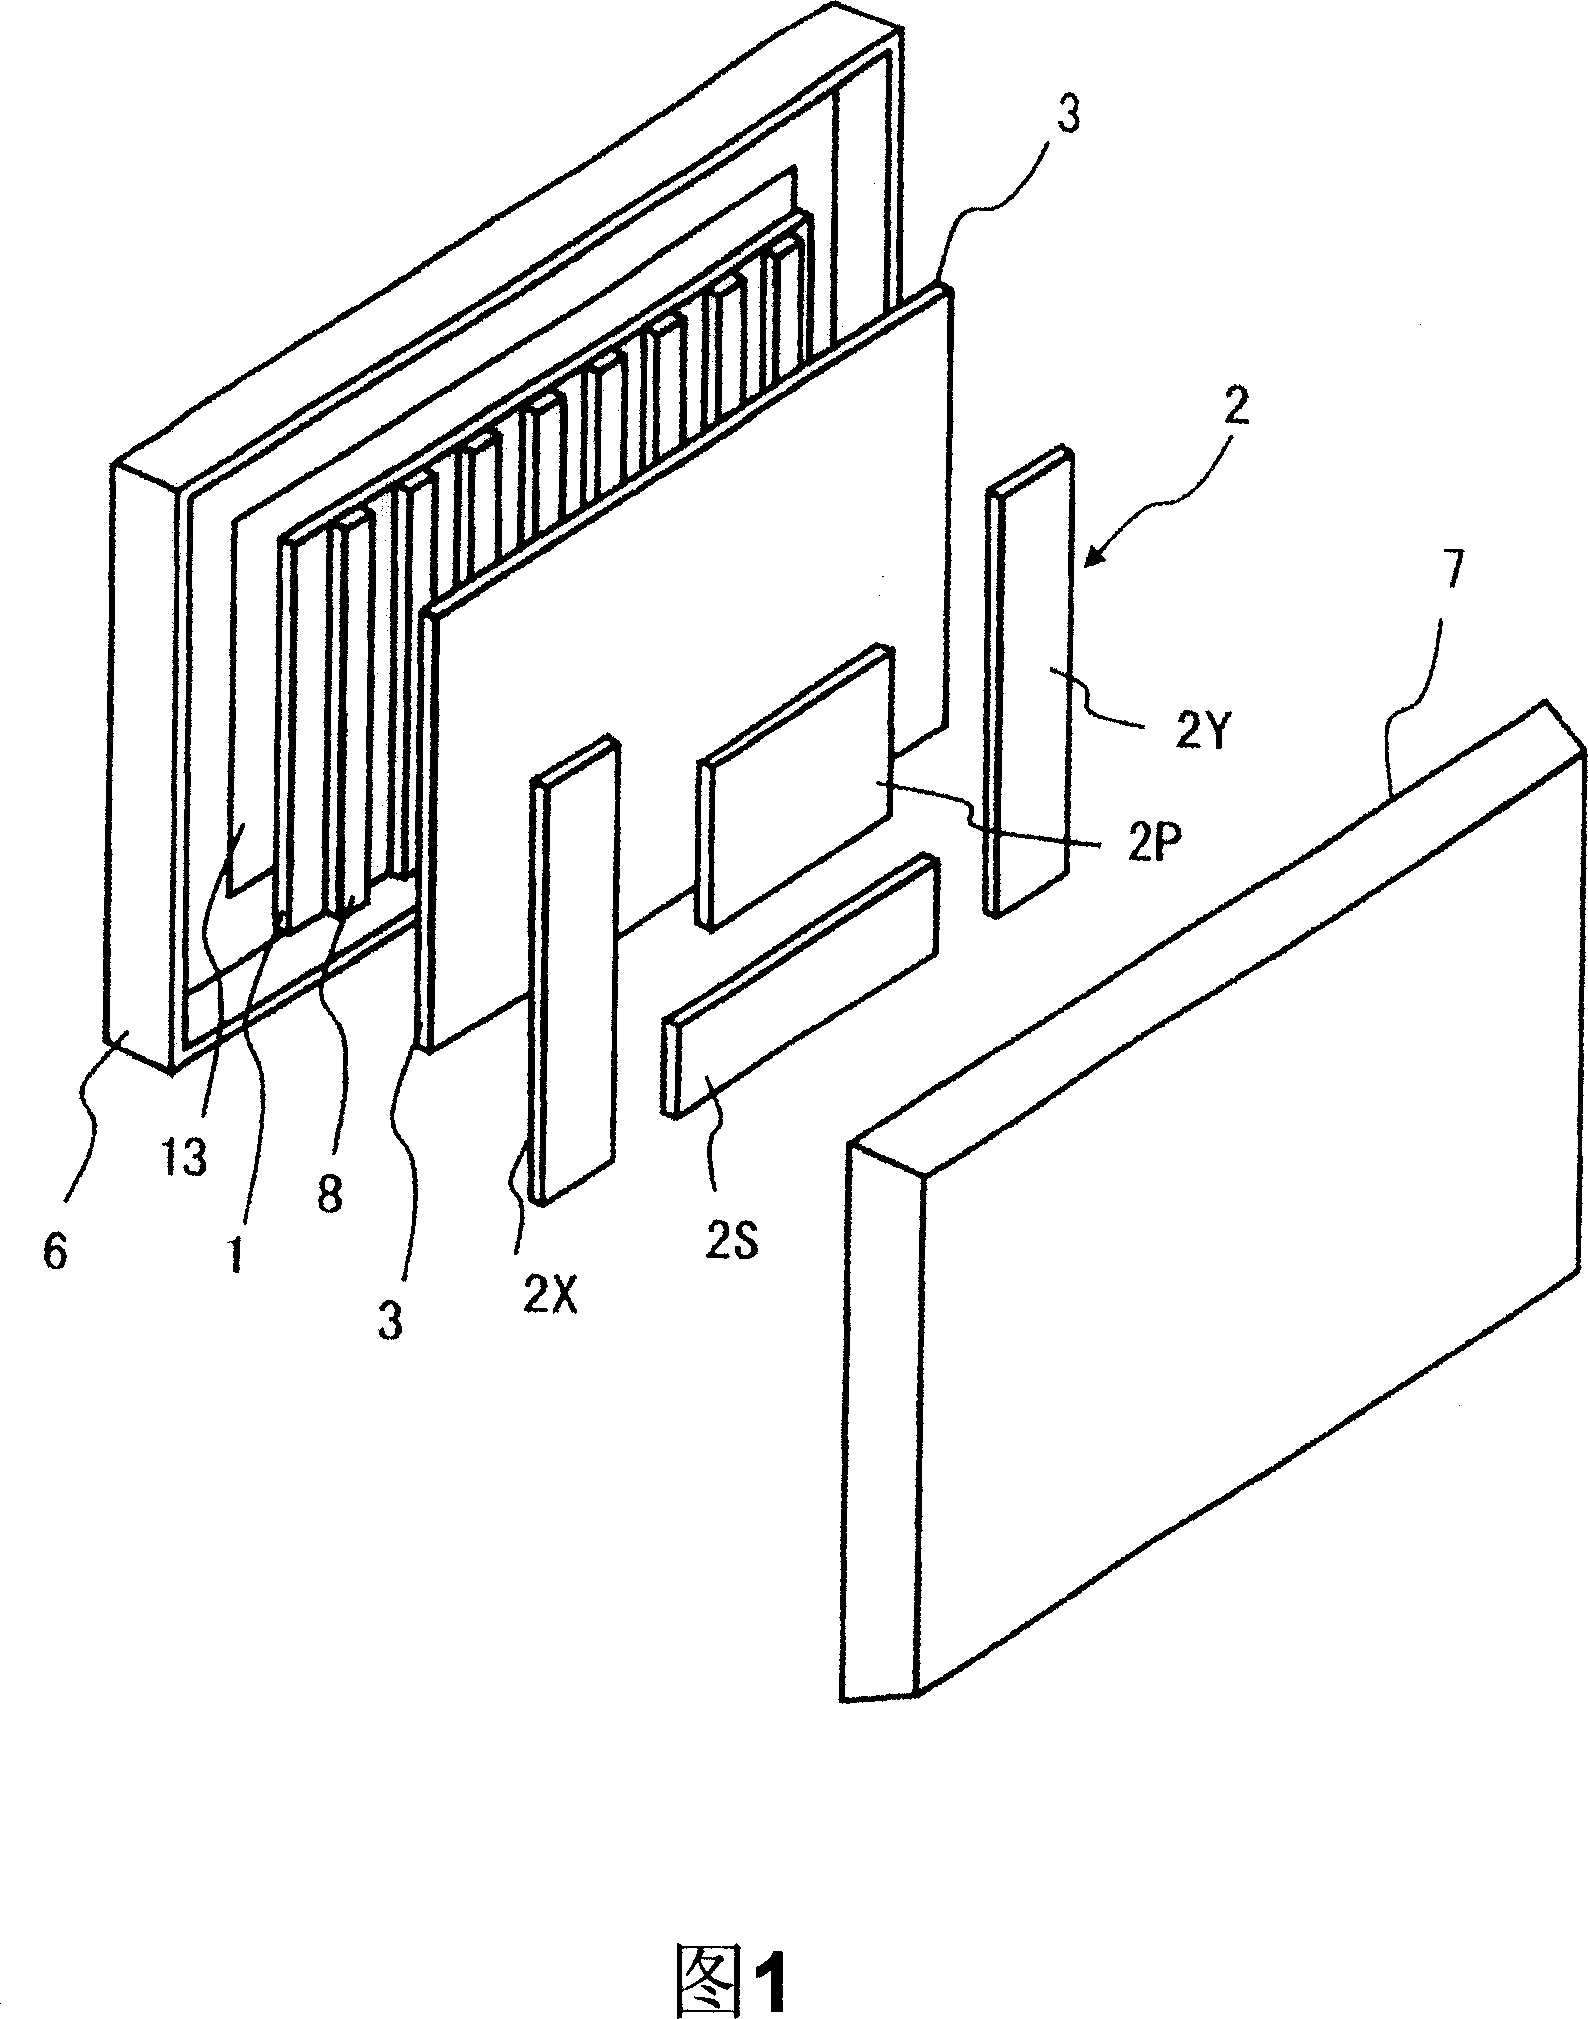 Flat-panel display apparatus